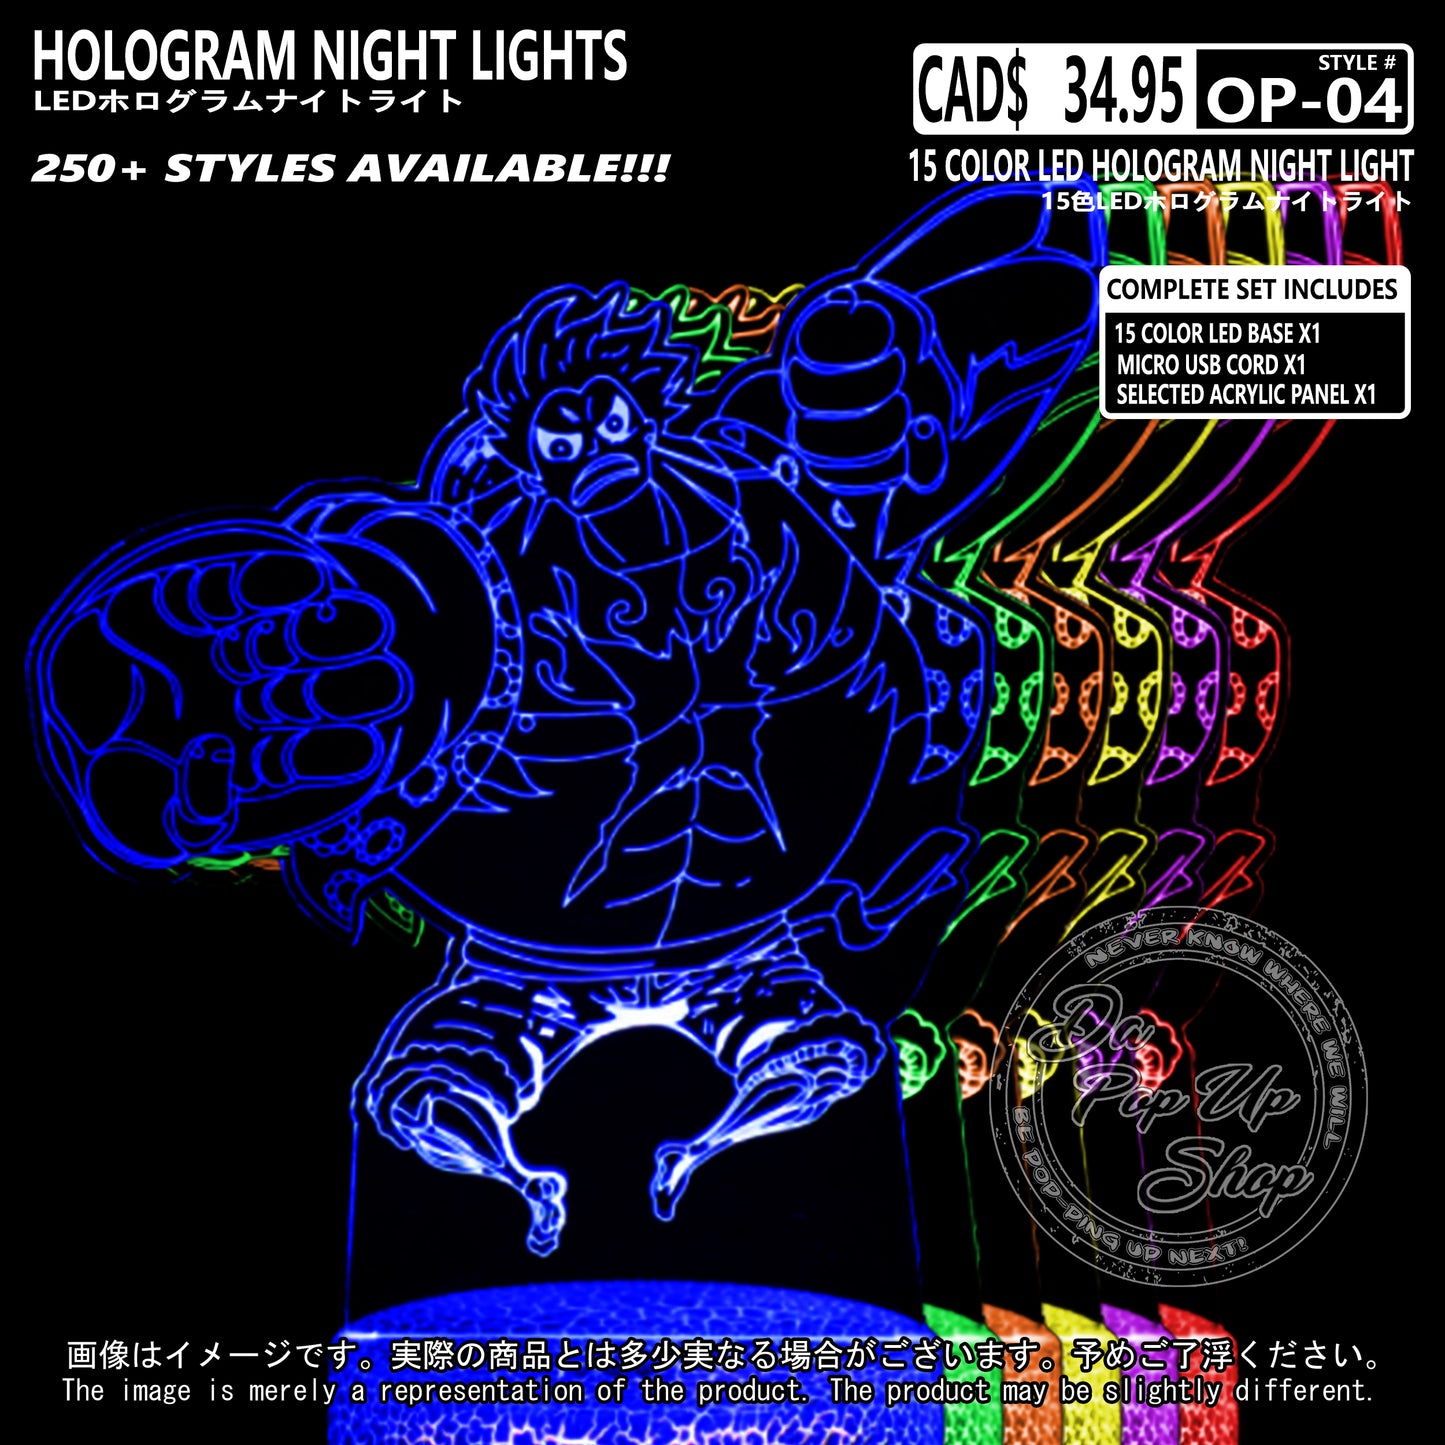 (OP-04) One Piece Hologram LED Night Light